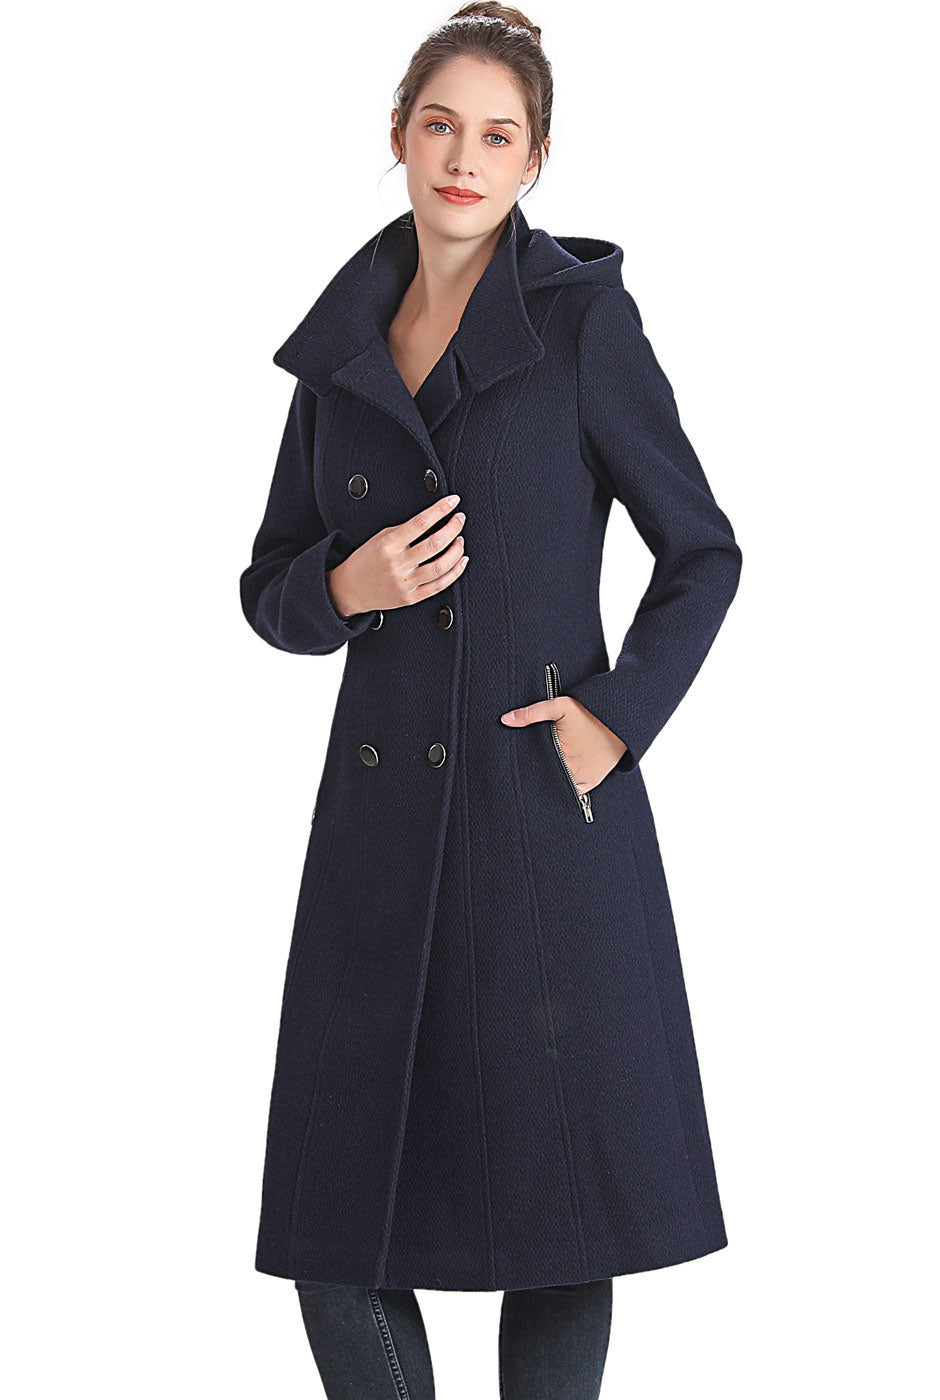 BGSD Women Ren Wool Stand Collar Walker Coat